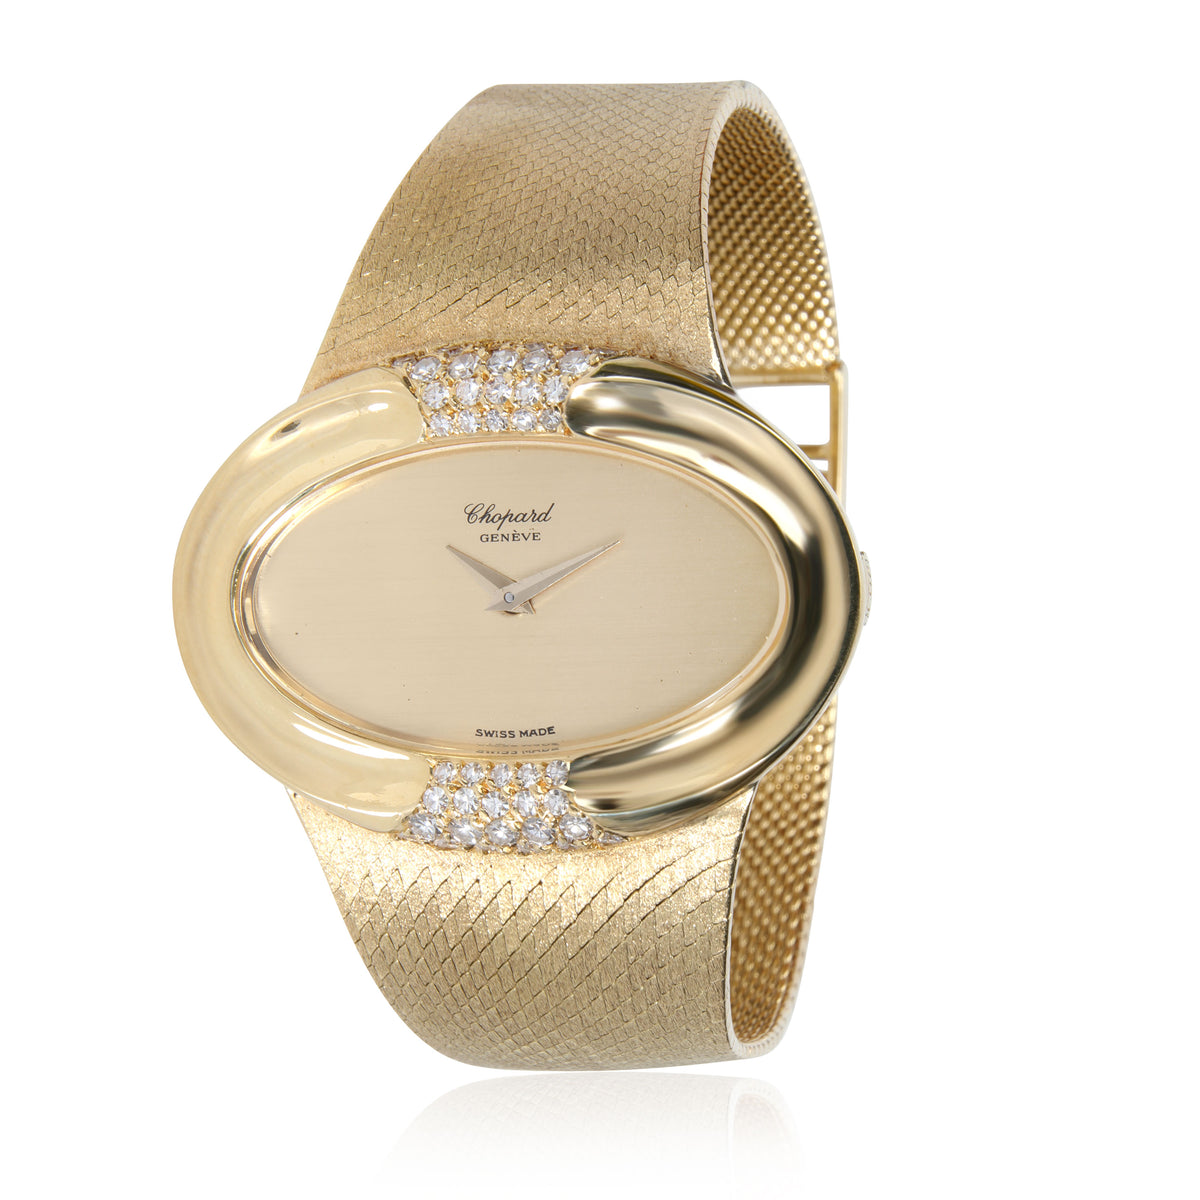 Chopard Dress 5047 1 Women's Watch in 18kt Yellow Gold